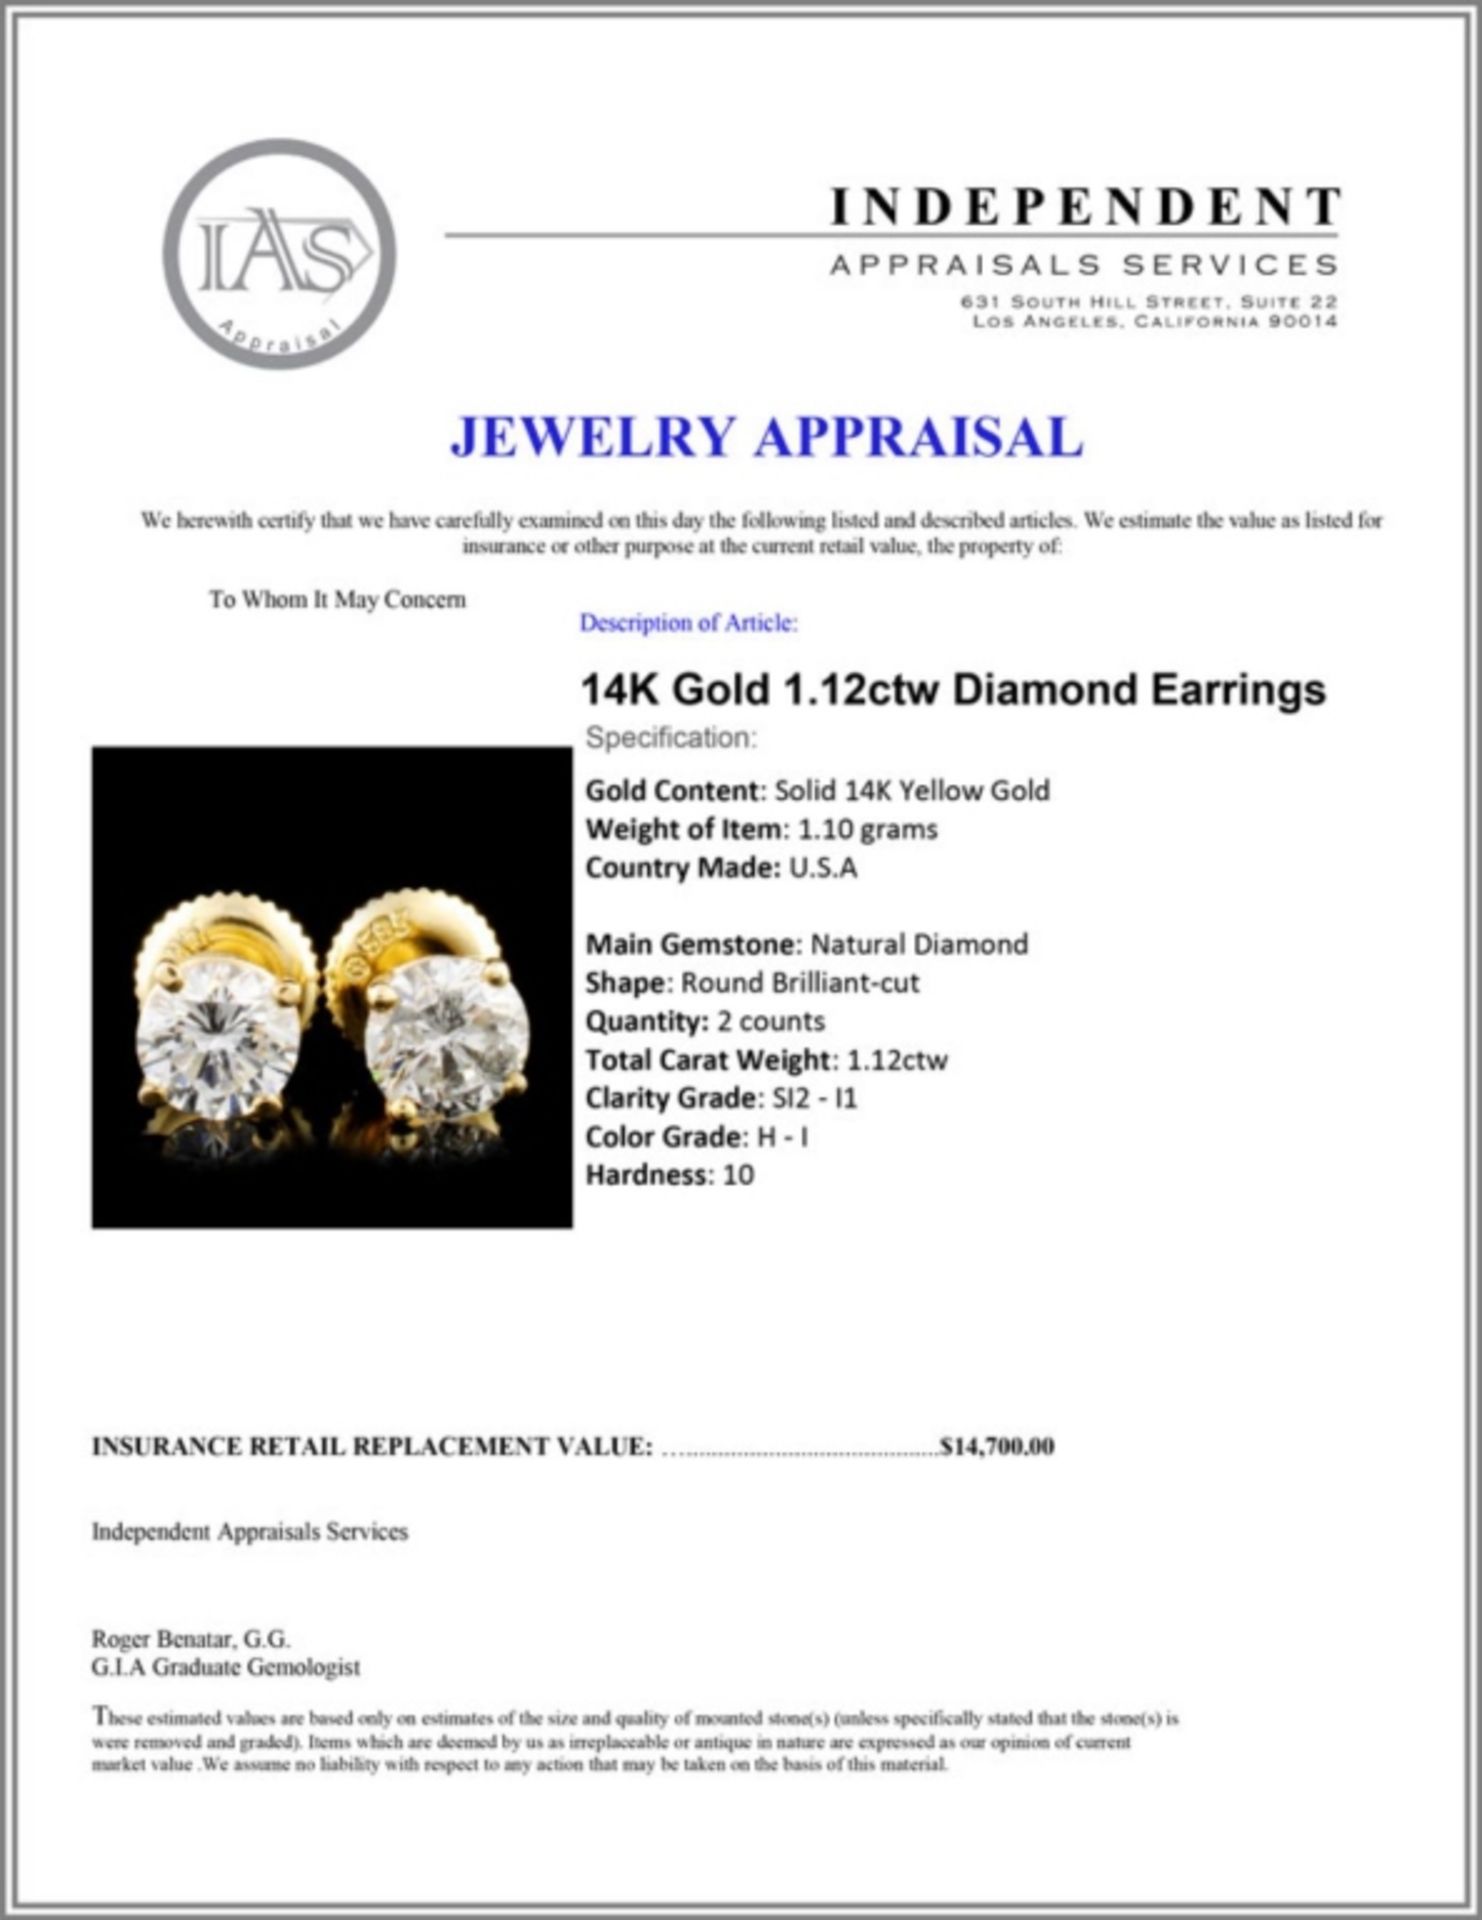 14K Gold 1.12ctw Diamond Earrings - Image 3 of 3